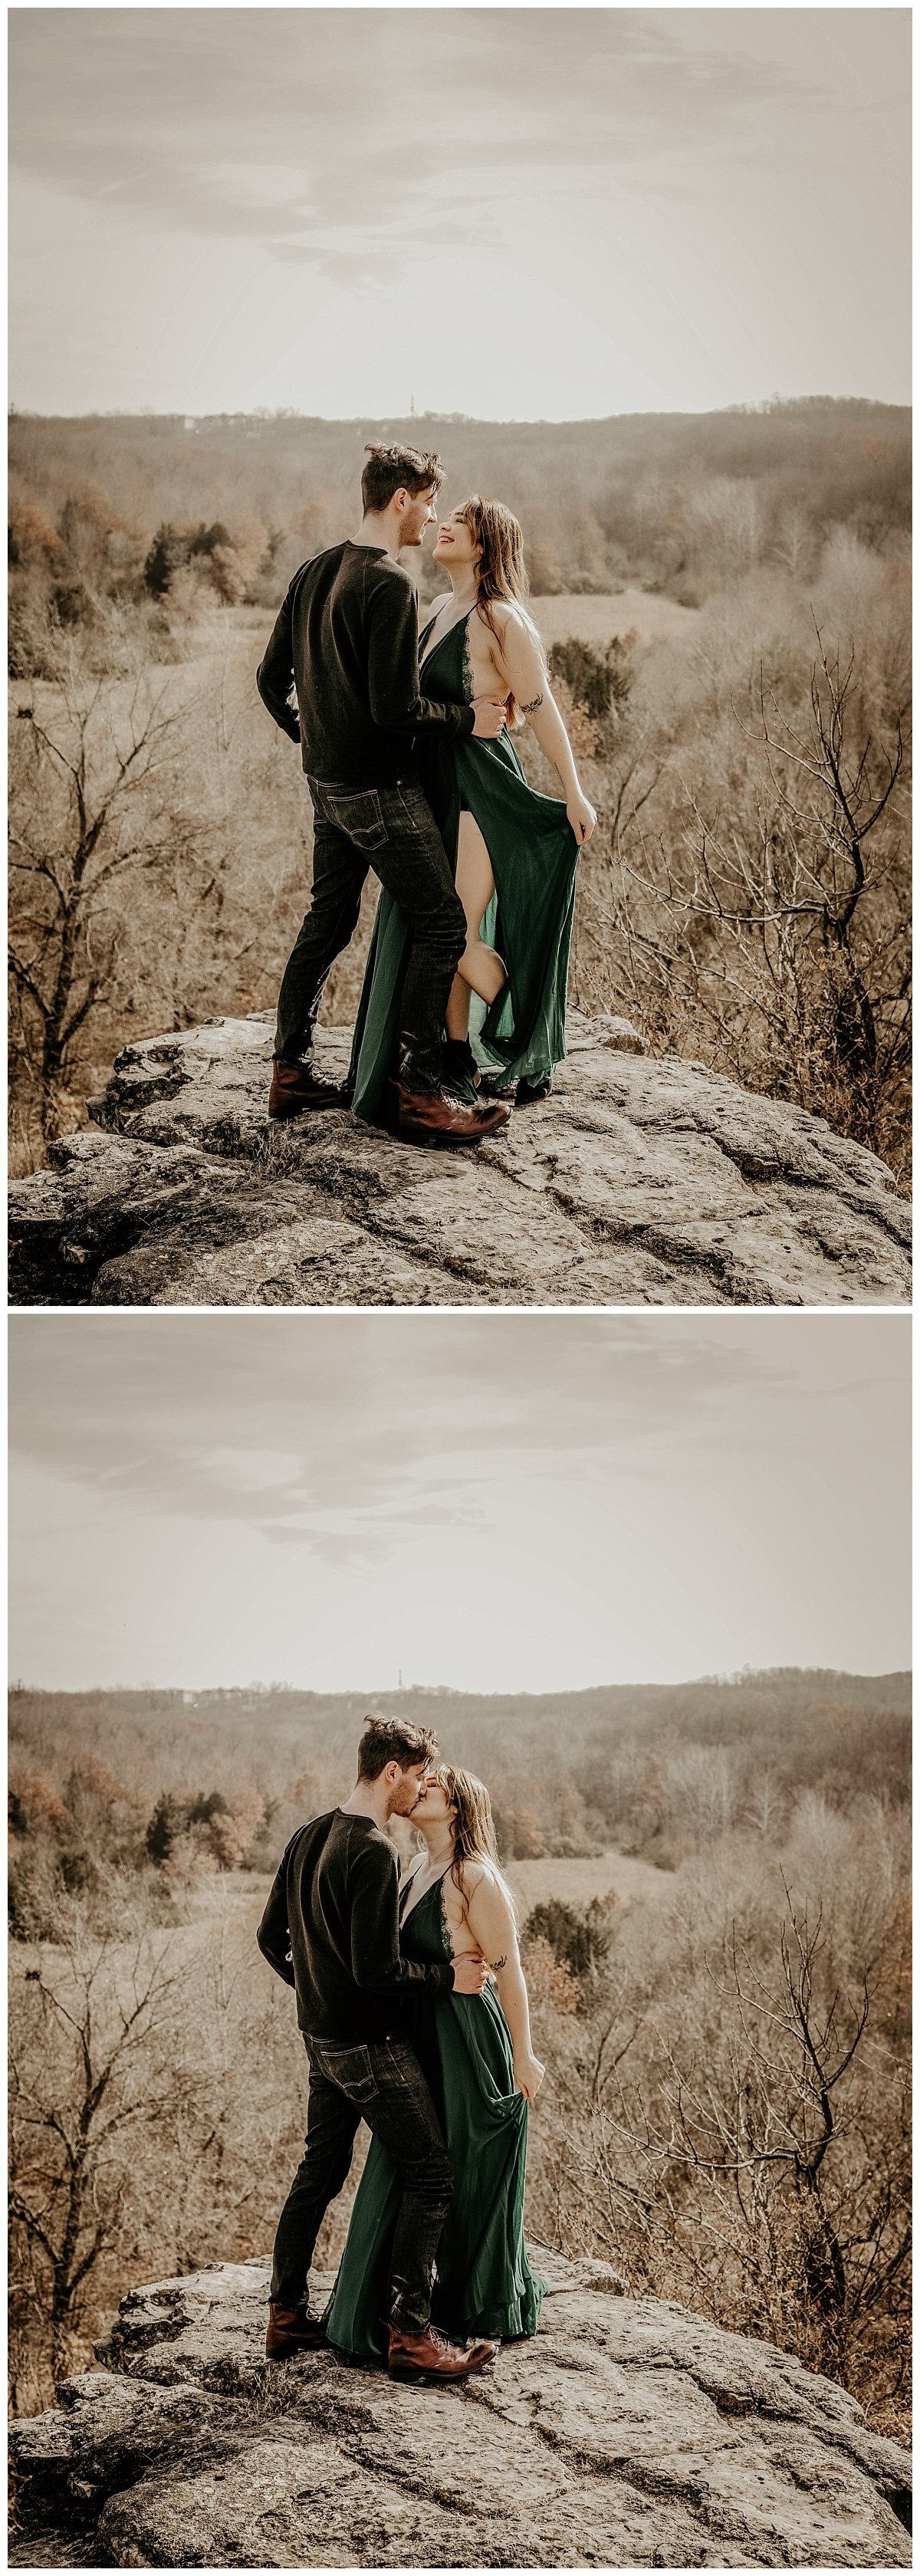 Couples+Adventure+Session+_+Mountain+Couples+Photos+_+Kansas+City+Engagement+Photography+Kansas+City+Wedding+Photography (4).jpeg